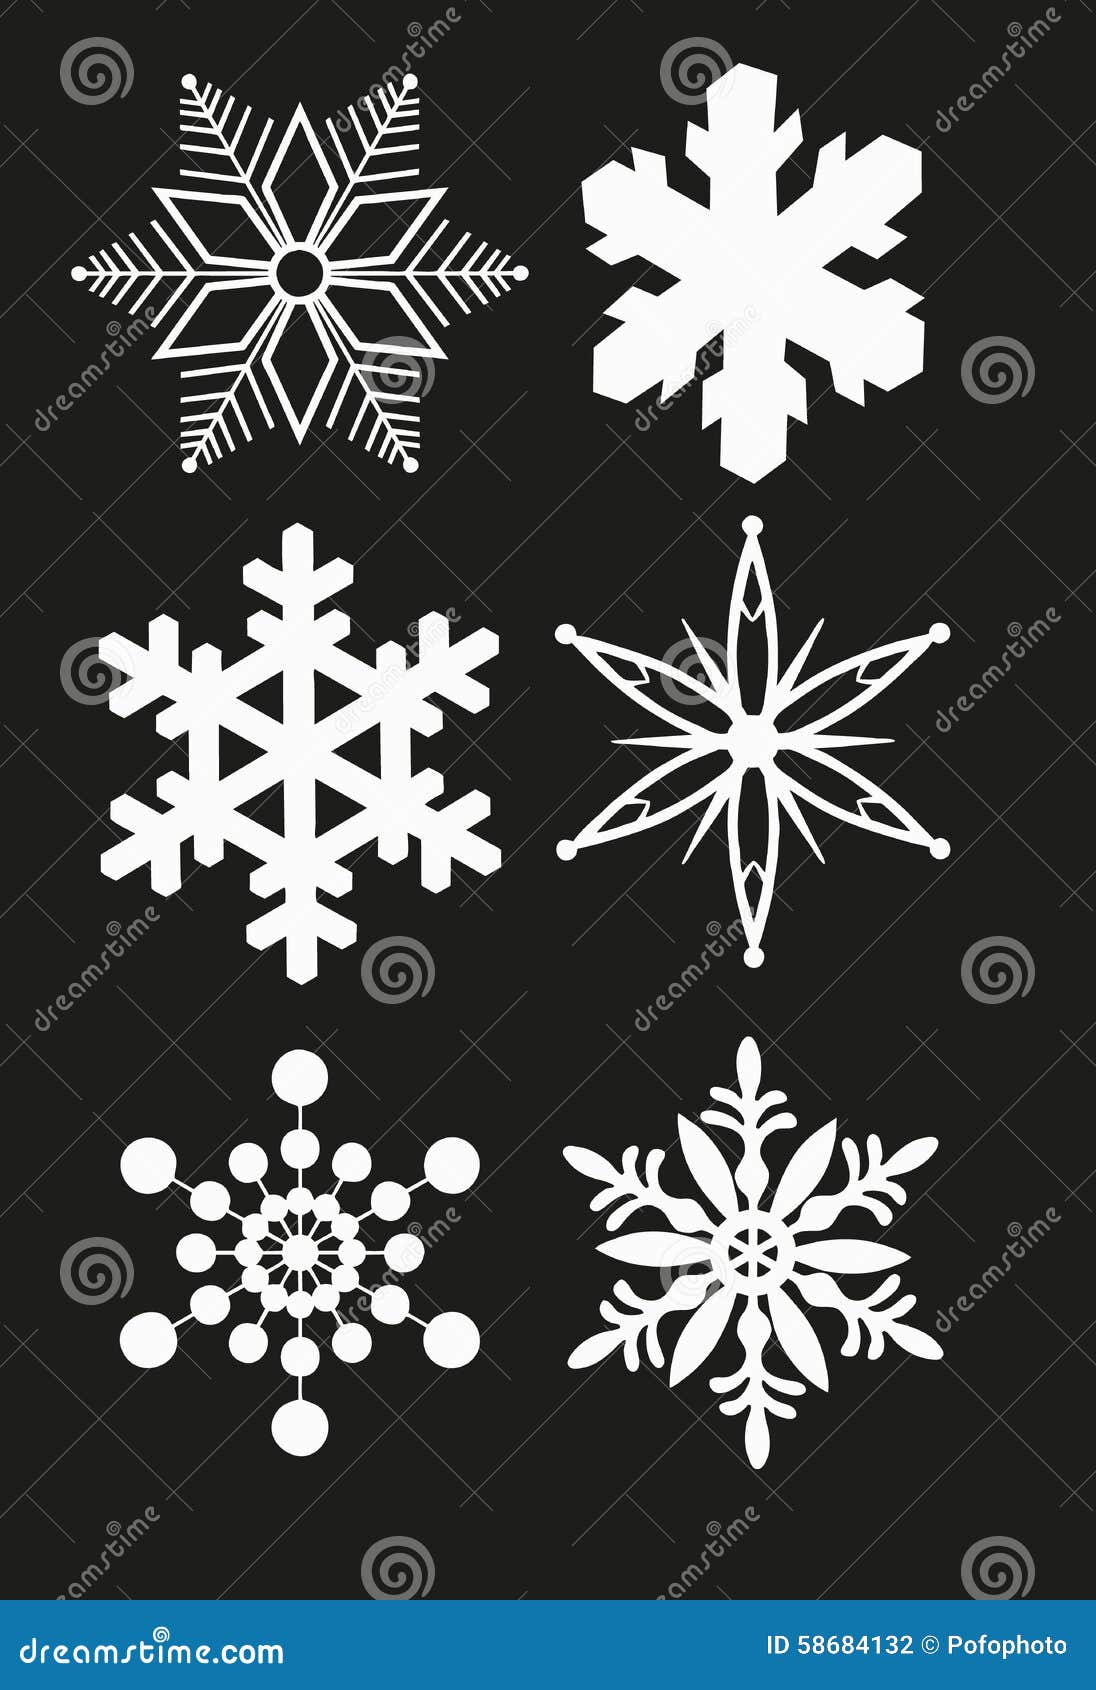 snowflake set 